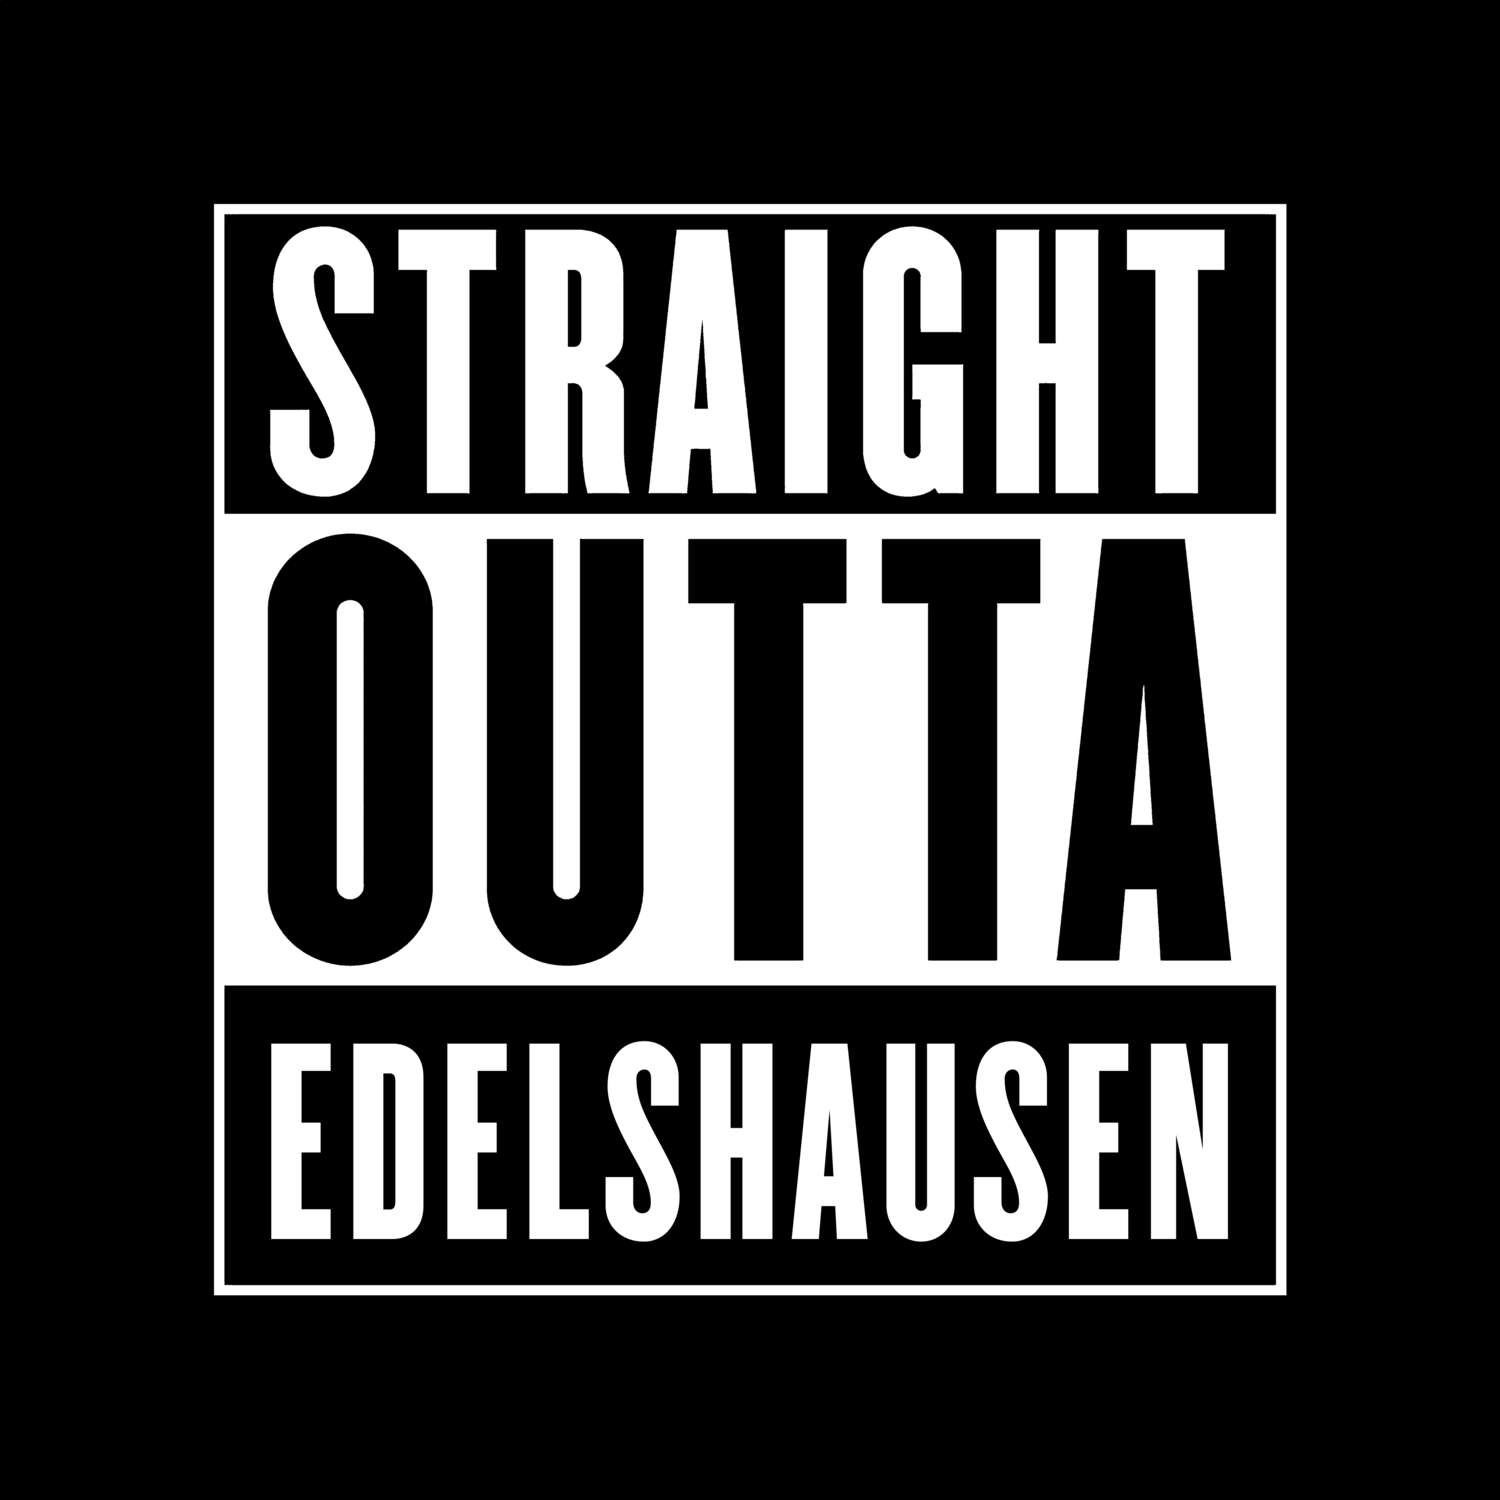 Edelshausen T-Shirt »Straight Outta«